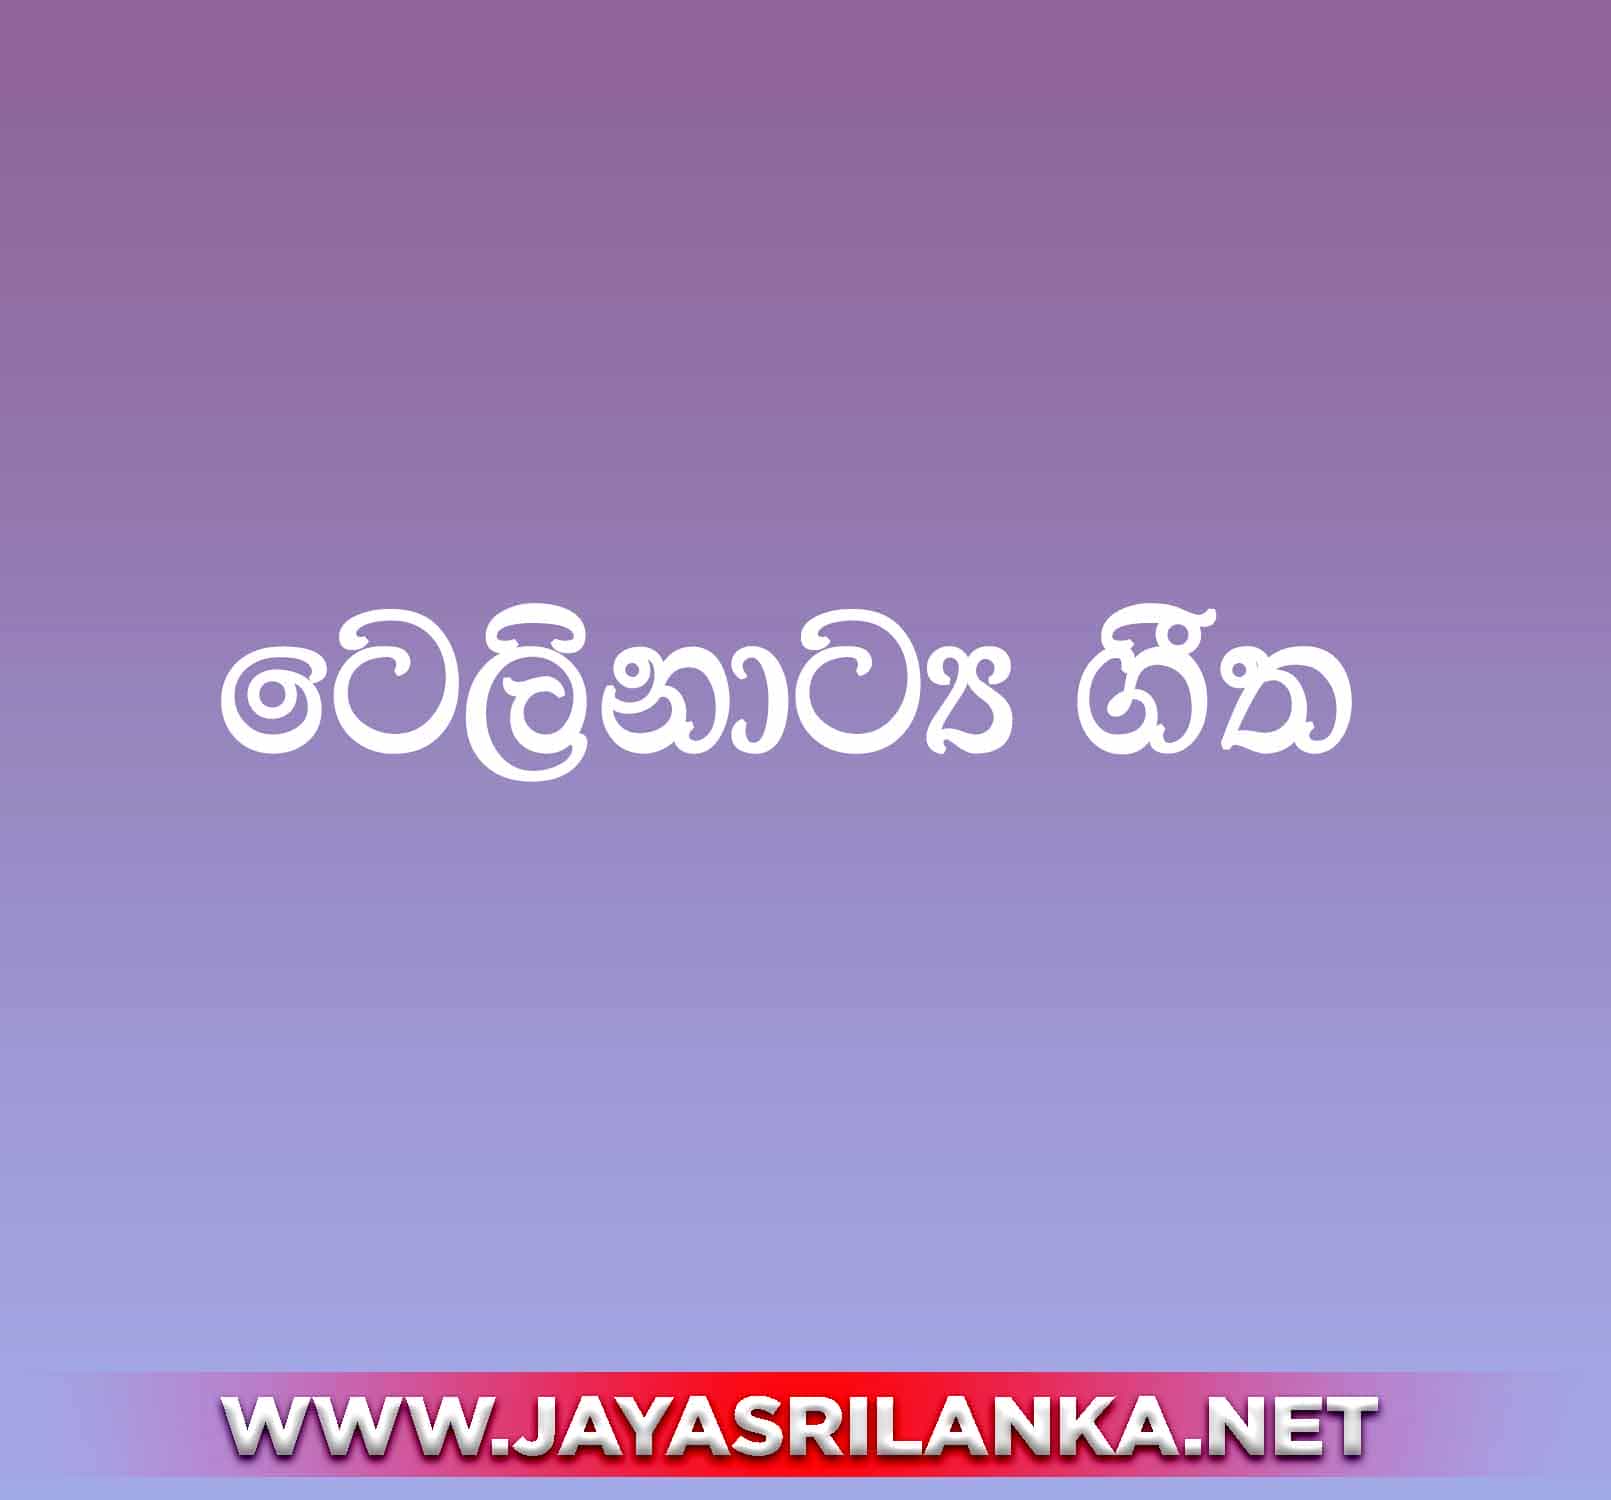 Duhul Maruthe (Sapna) - Sinhala Teledrama Songs mp3 Image